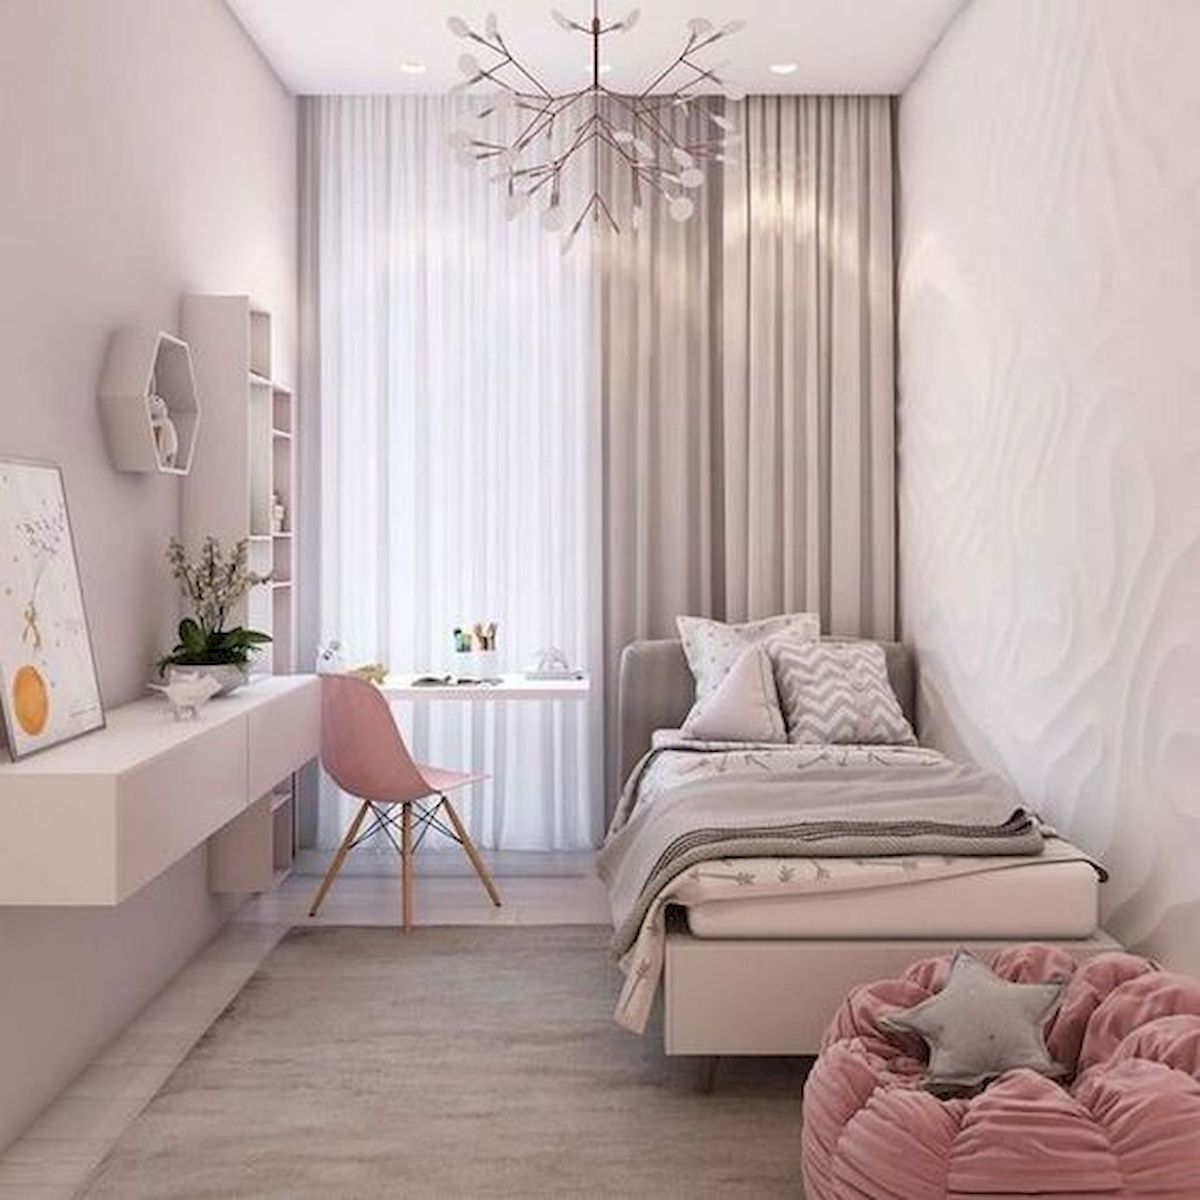 60 Beautiful Bedroom Decor and Design Ideas (13)